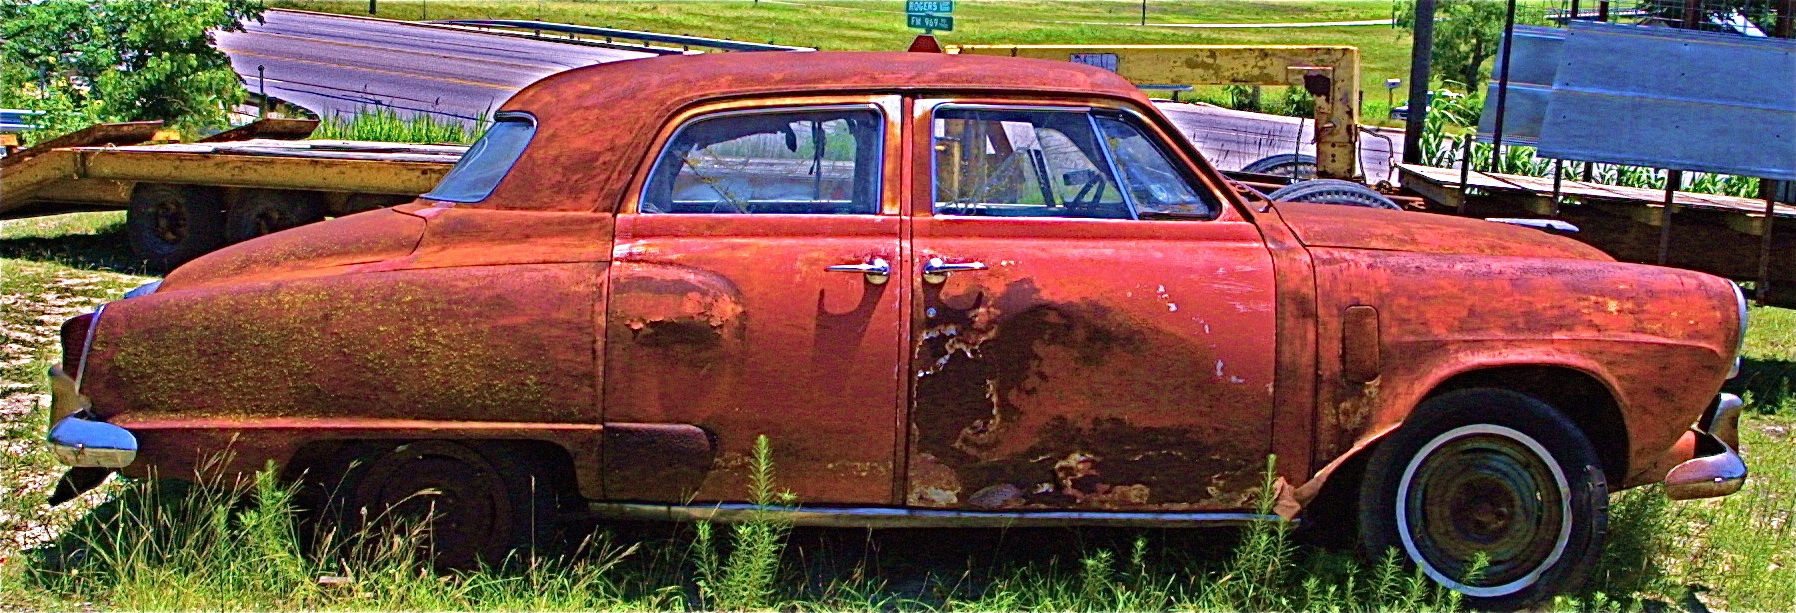 1951 Studebaker in Austin TX  side view